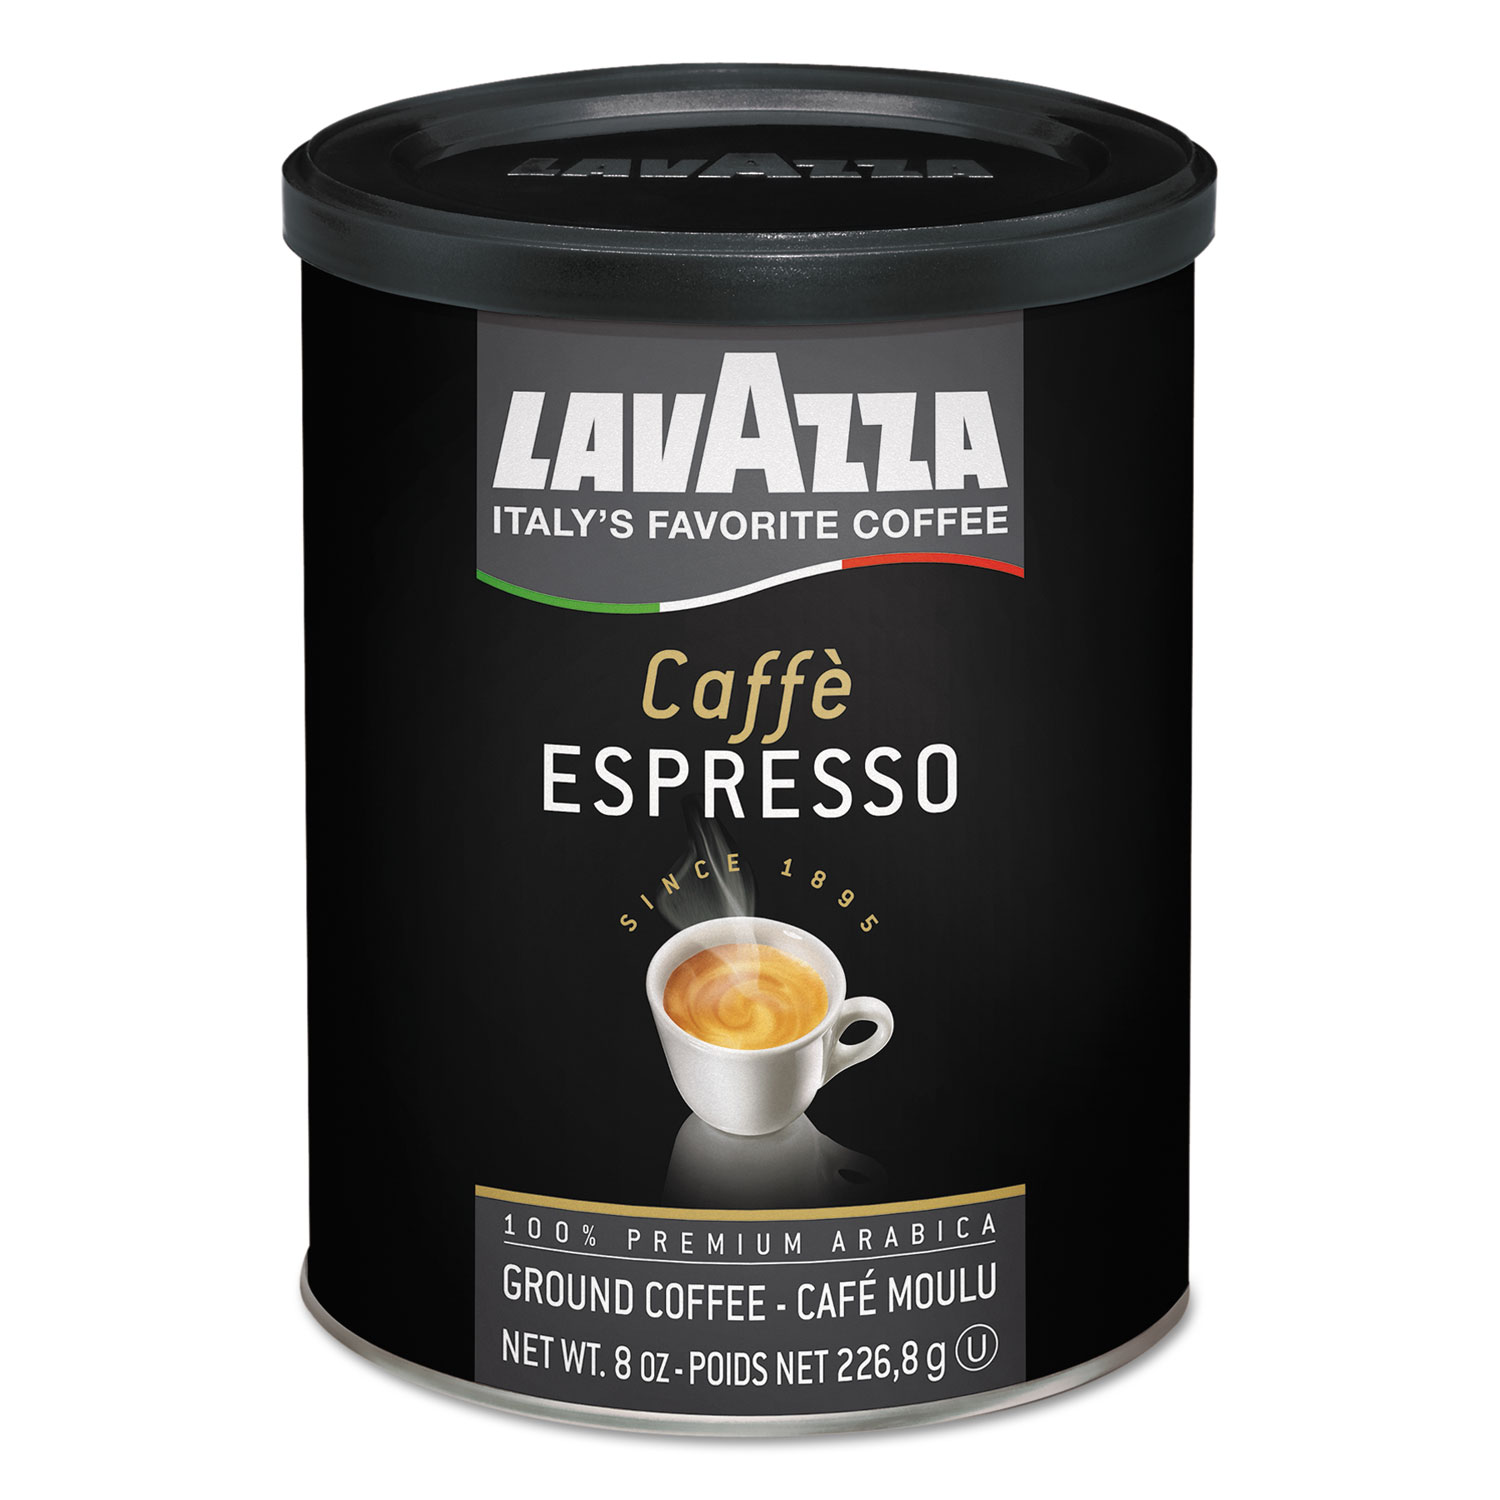  Lavazza 1450 Caffe Espresso Ground Coffee, Medium Roast, 8 oz Can (LAV1450) 